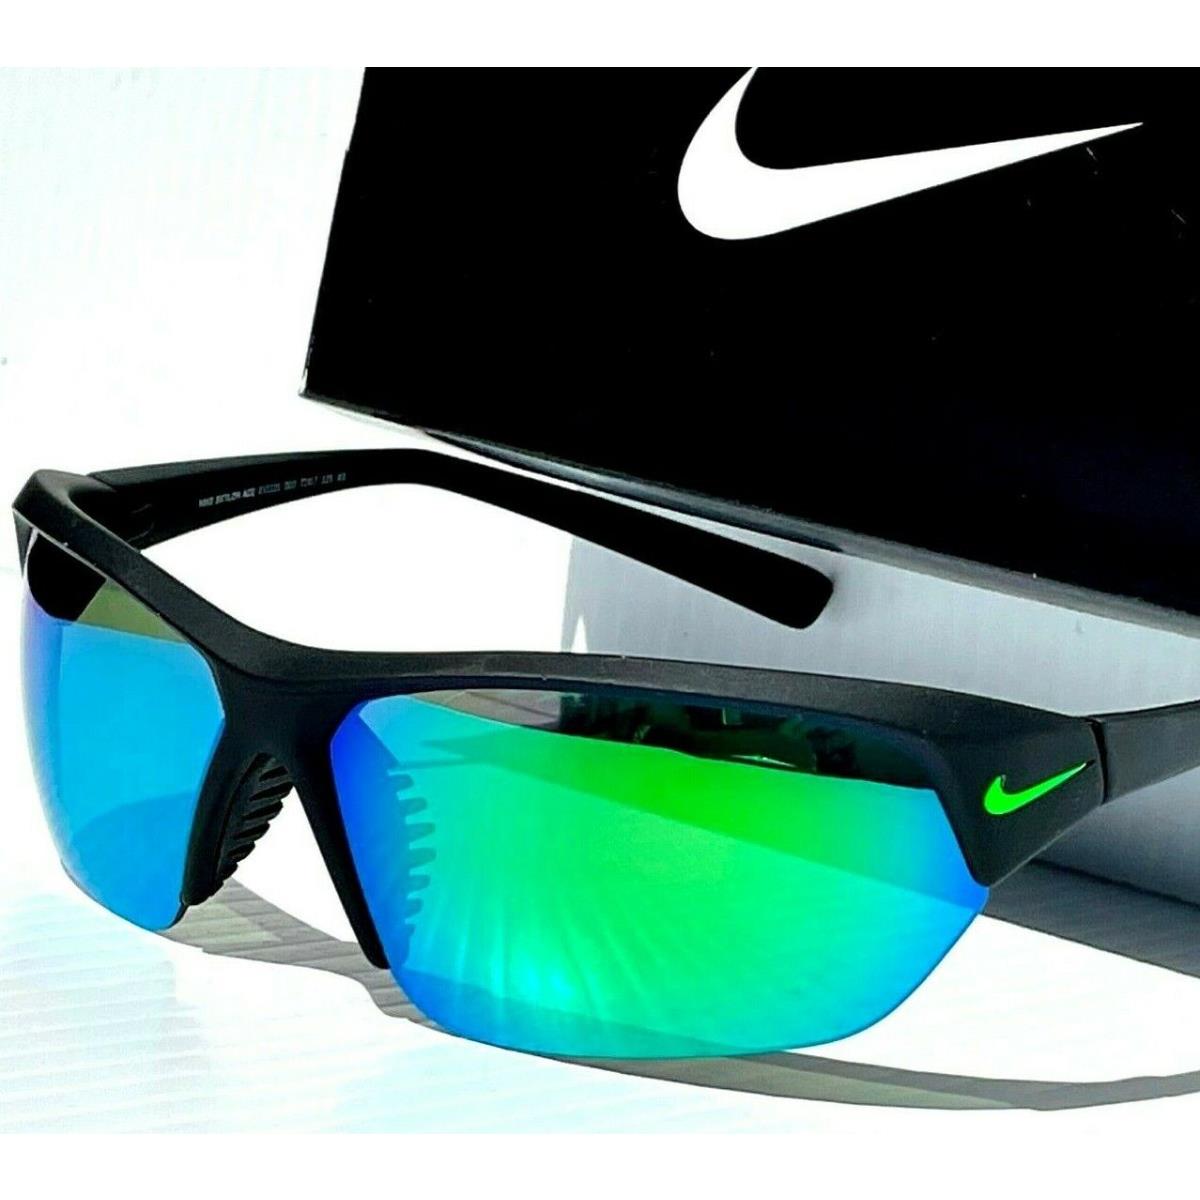 Nike Skylon Ace Black Polarized Galaxy Jade Green Mirrored Sunglass EV1125 003